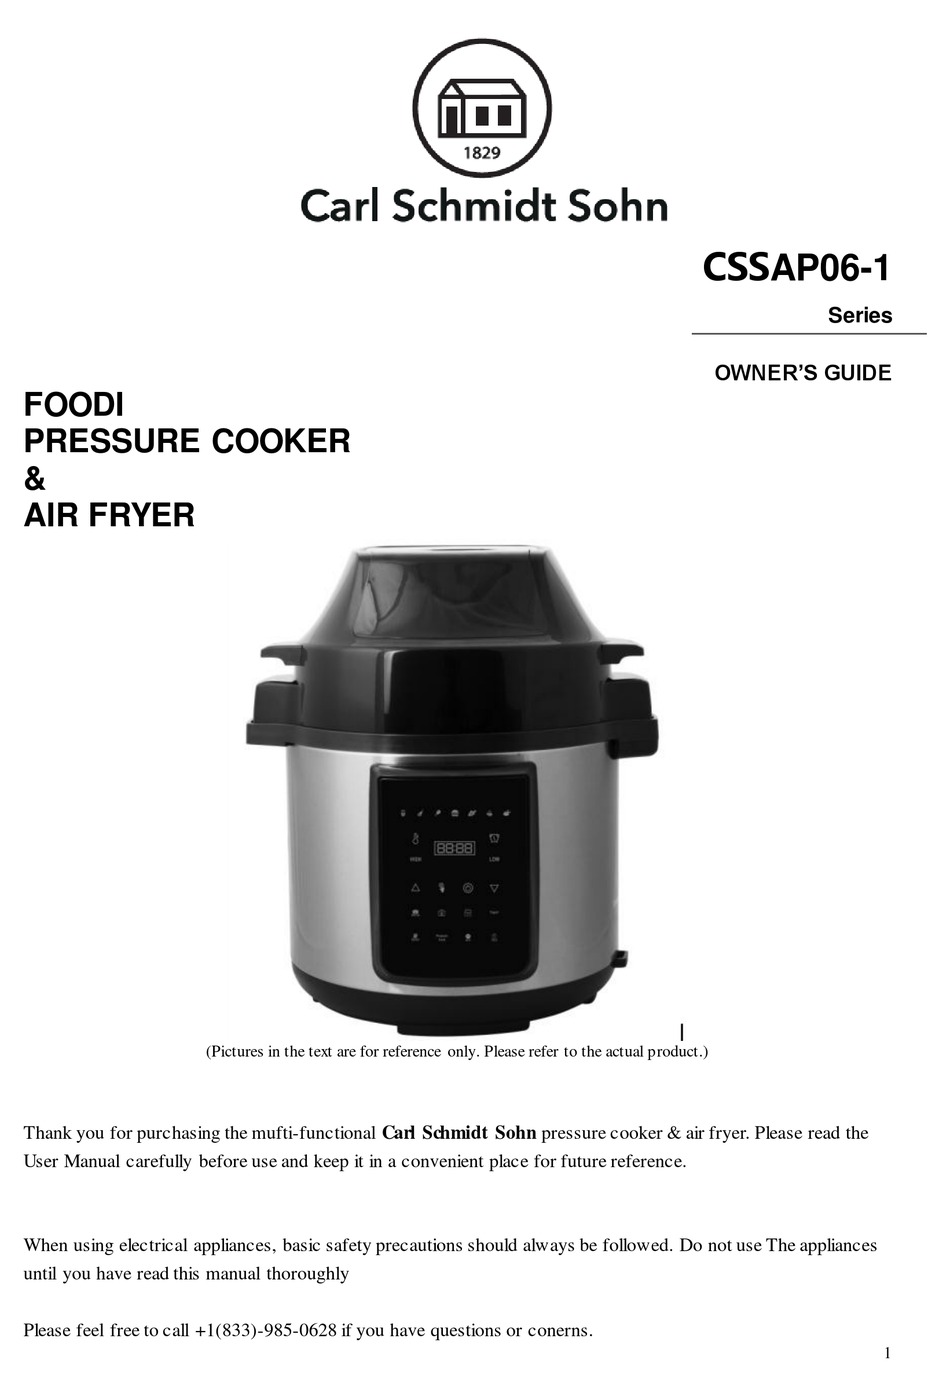 CS-CSSAP-02 1500W CARL SCHMIDT SOHN LED 6Qt Pressure Cooker & Air Fryer  Combo